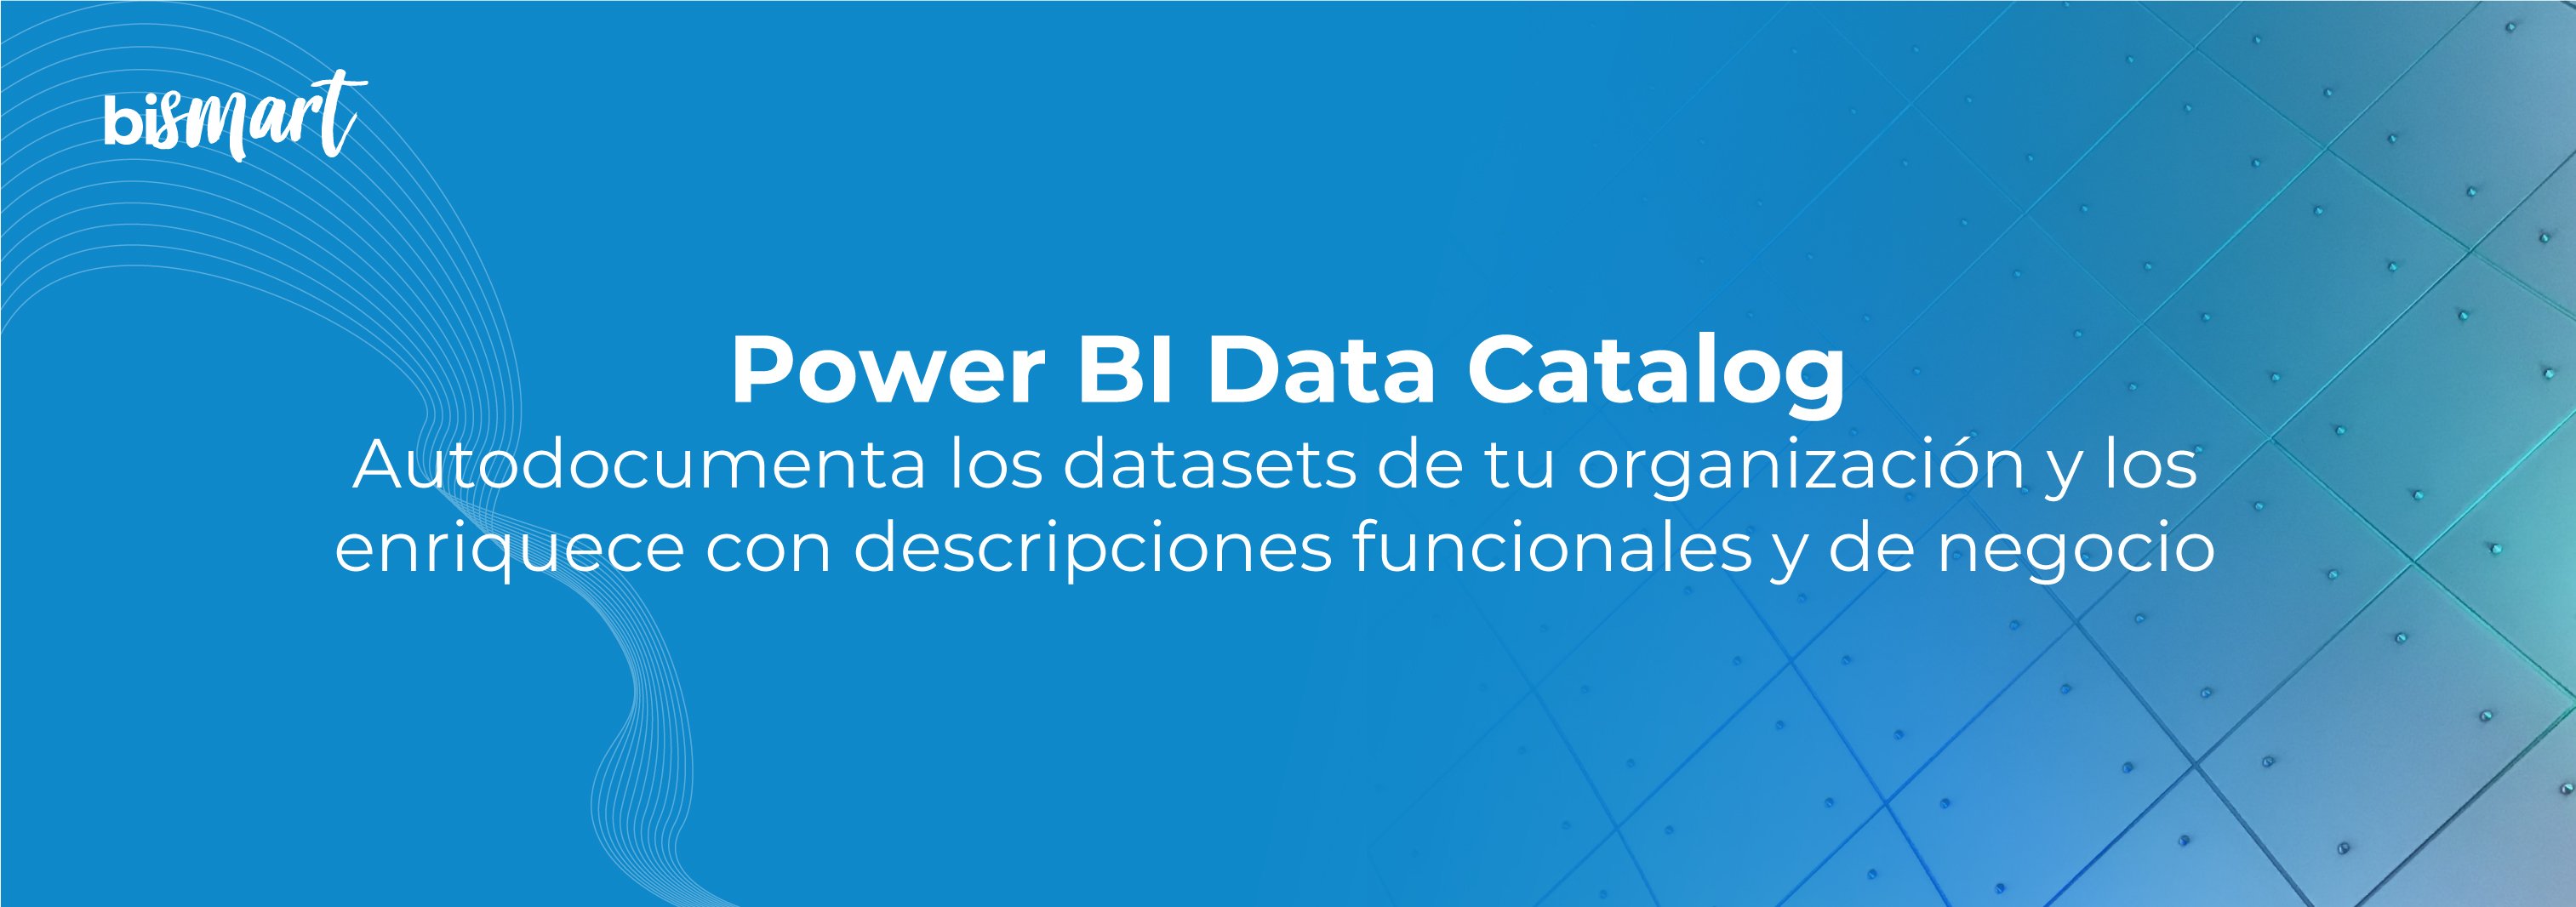 PowerBI-Data-Catalog-banner-ES